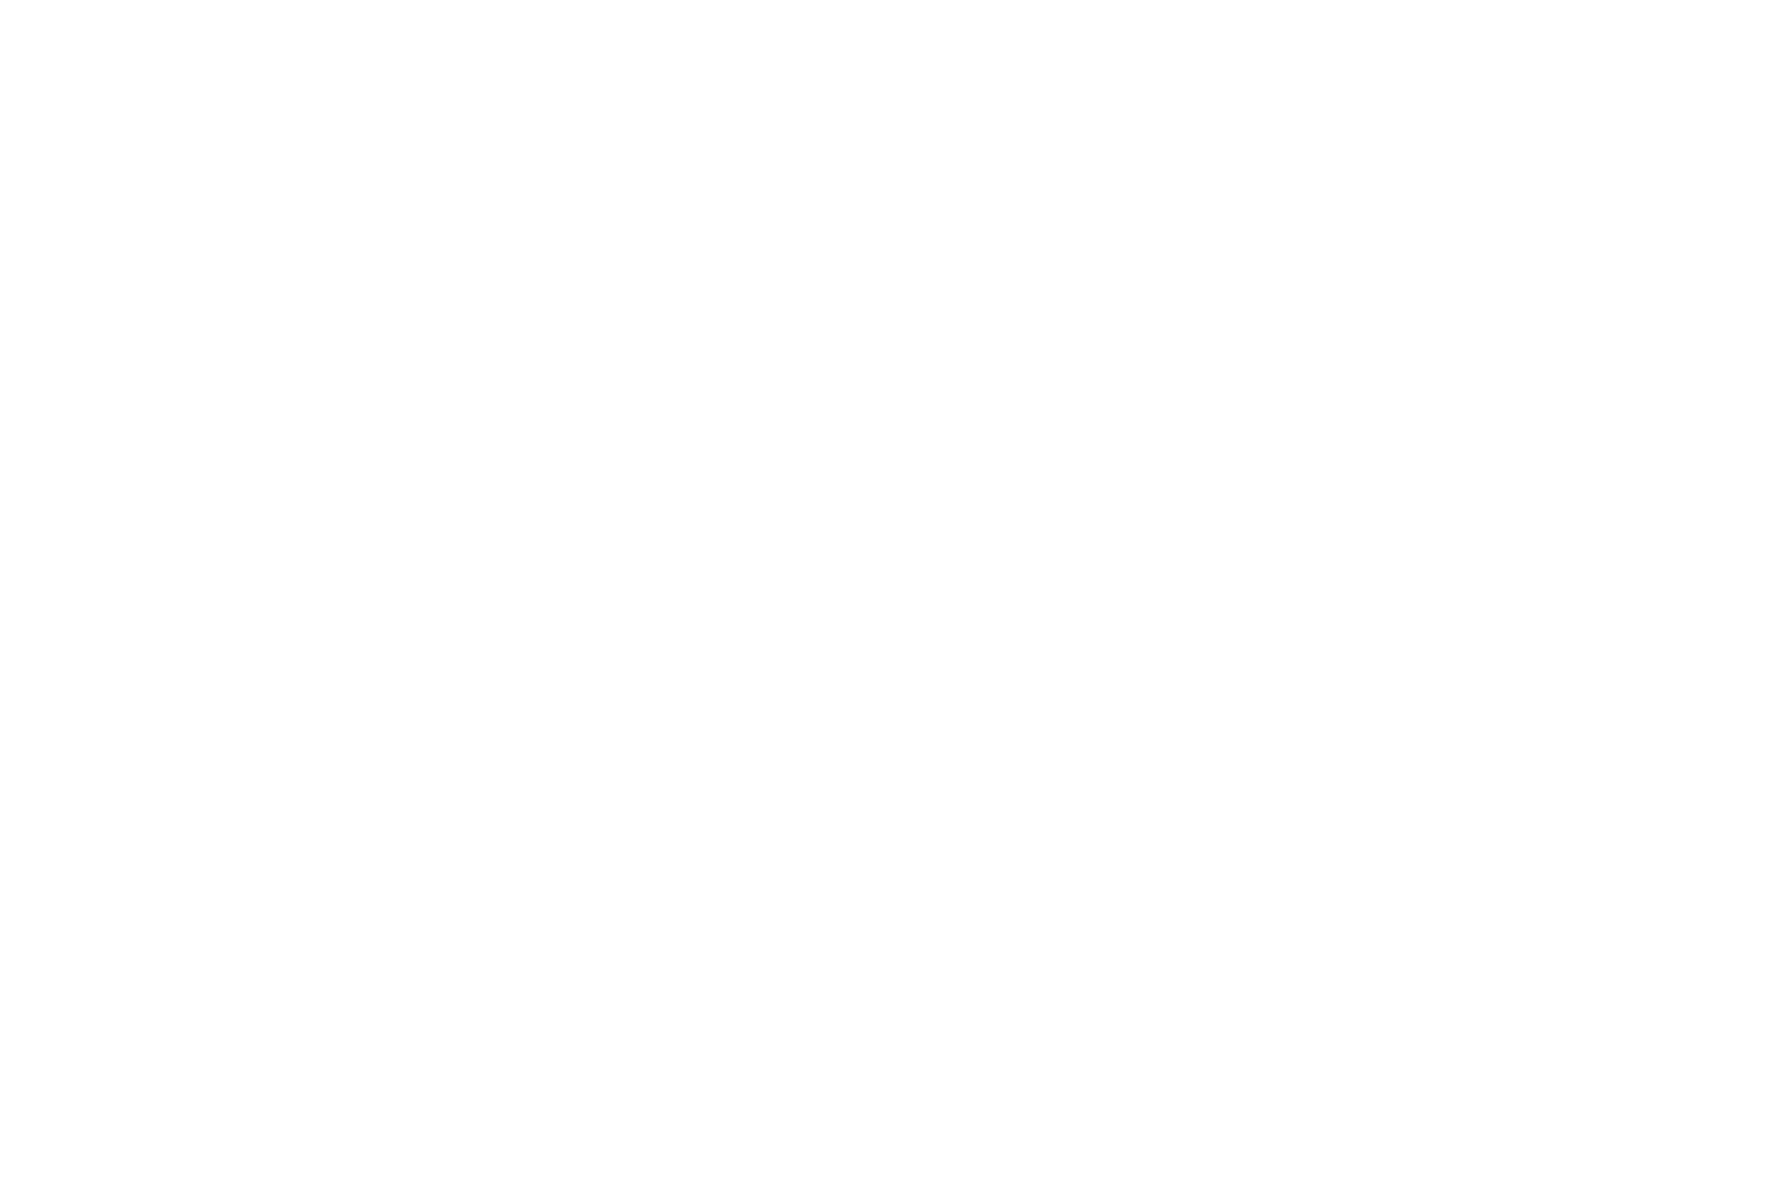 American Heart Association - Digital NEXA Consulting Client